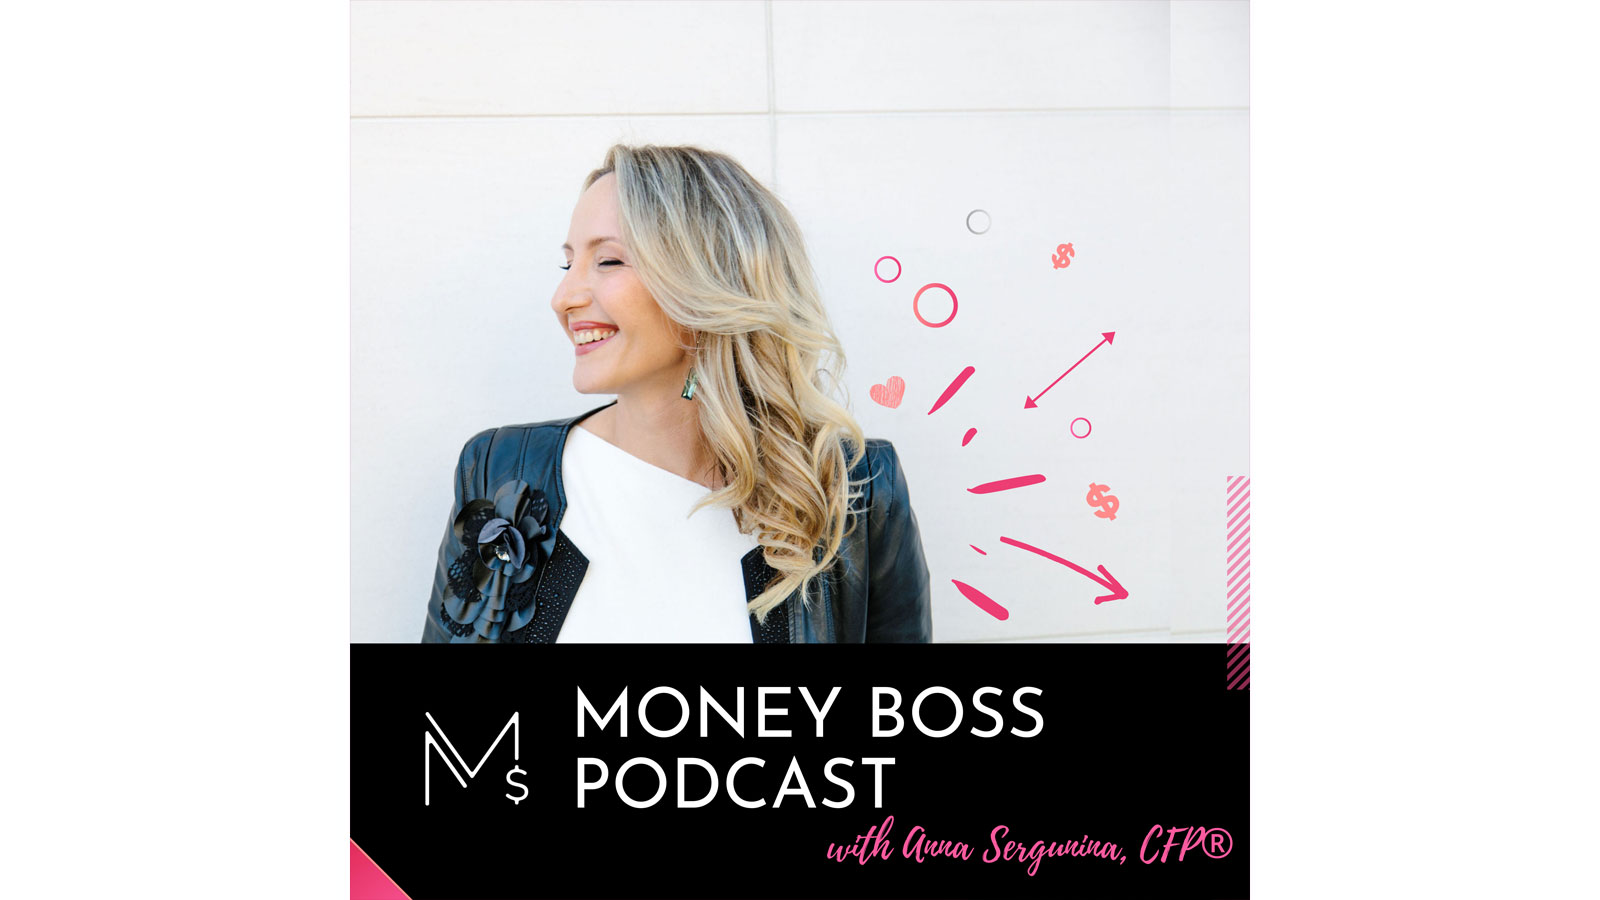 Money Boss Podcast with Anna Sergunina CFP